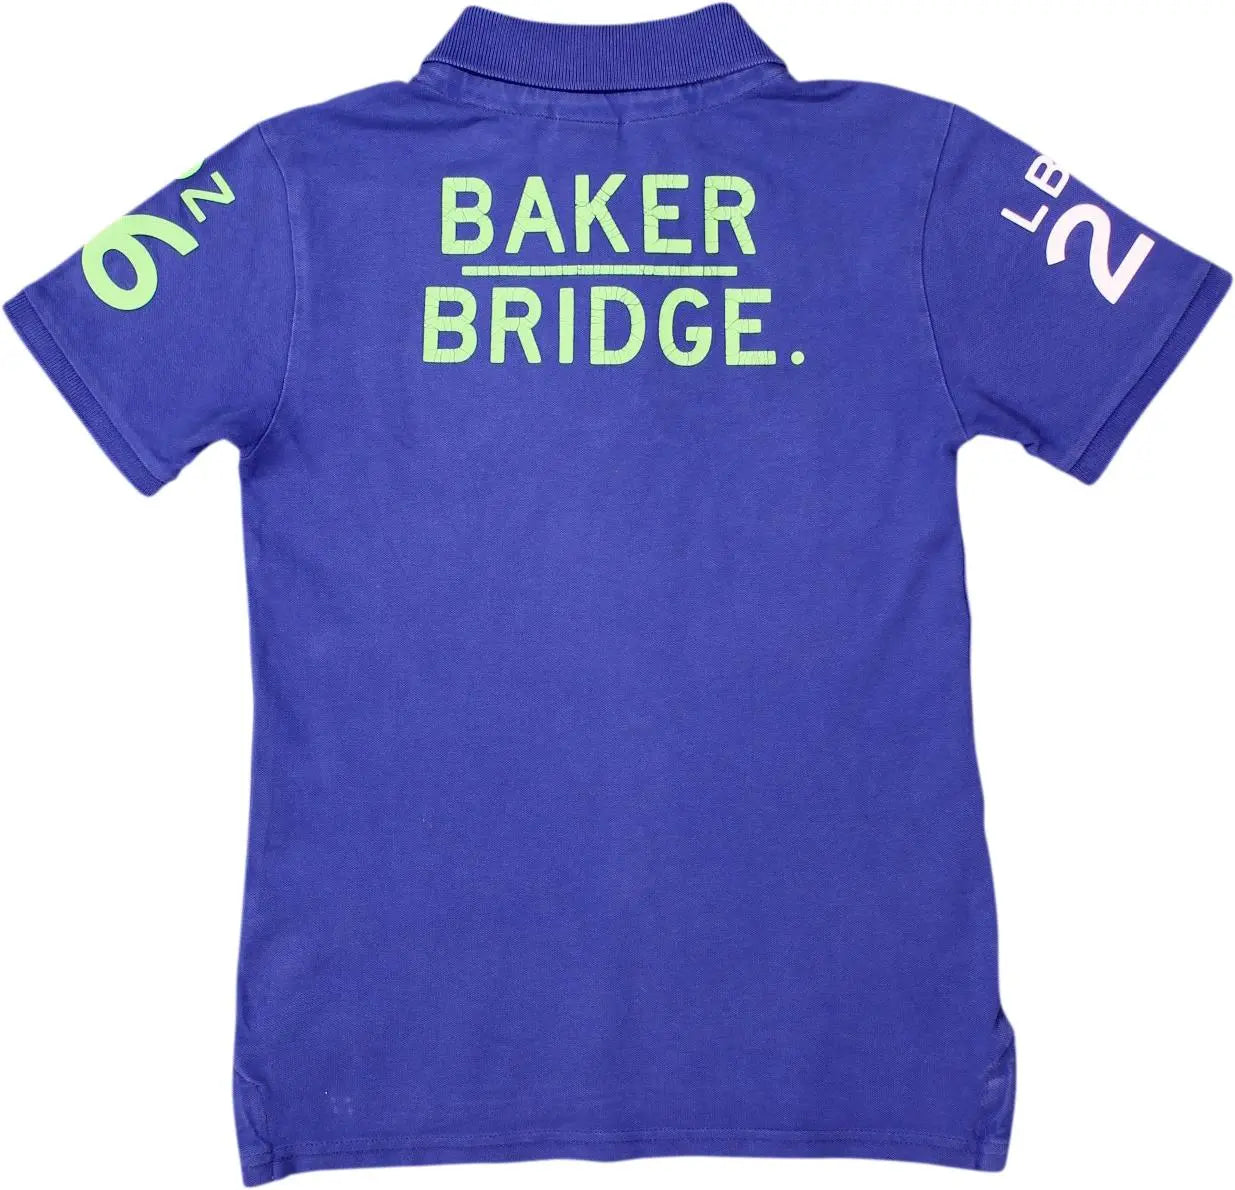 Baker Bridge - GREEN2793- ThriftTale.com - Vintage and second handclothing